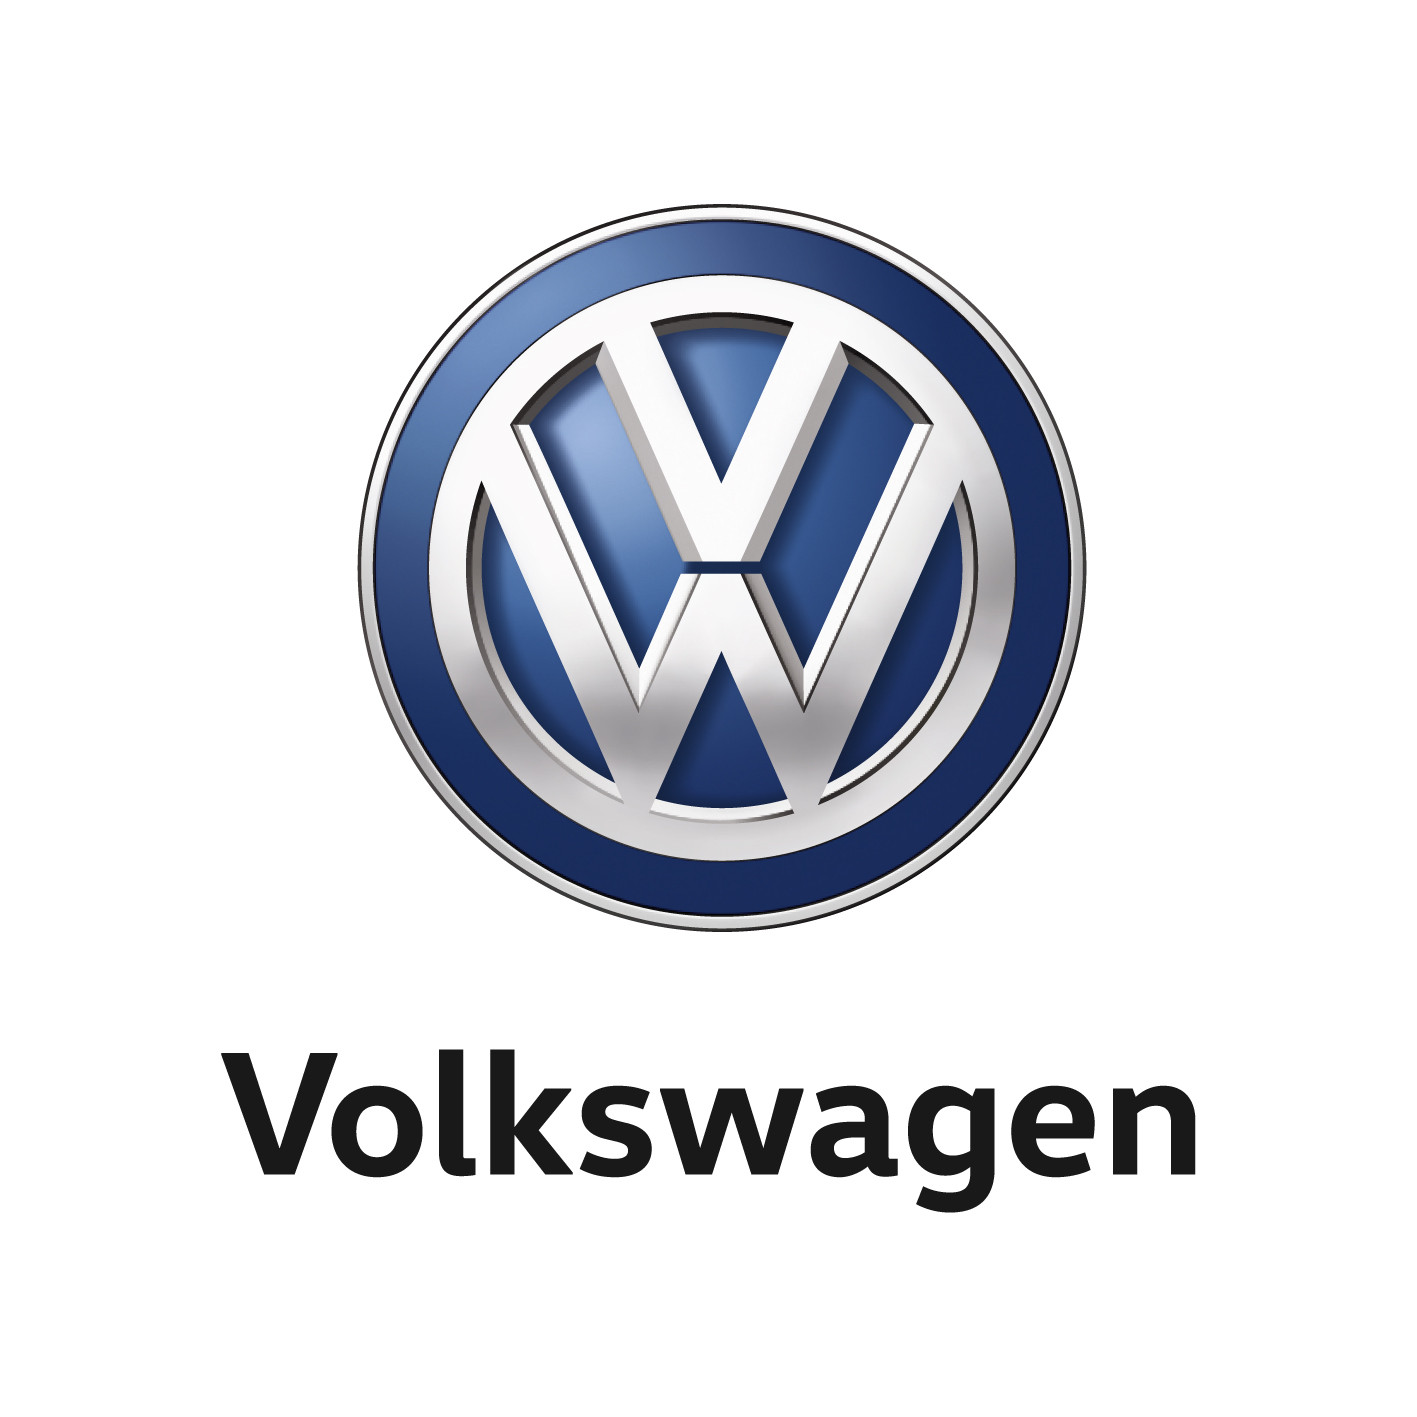 Fréttatilkynning varðandi Polo 2018 frá Volkswagen